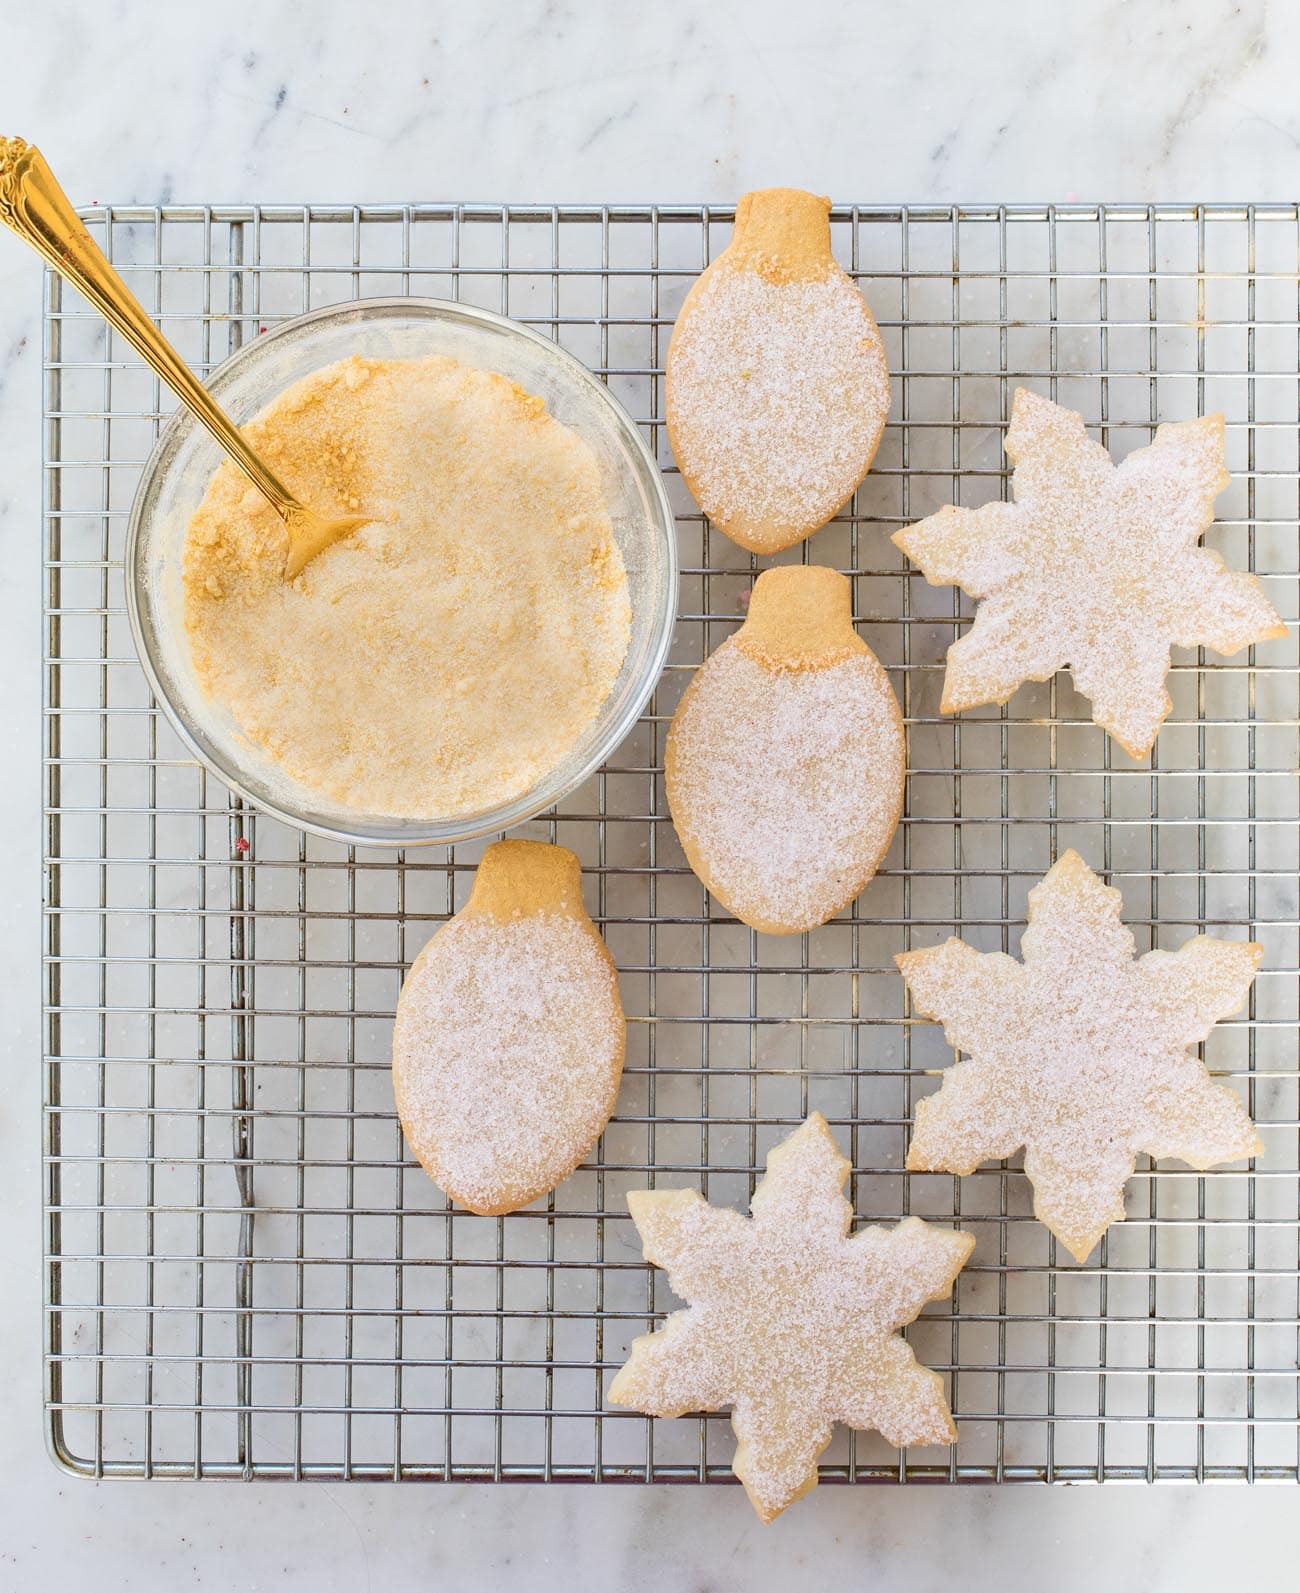 Tips on Baking With Kids - Gold Medal Flour Blog